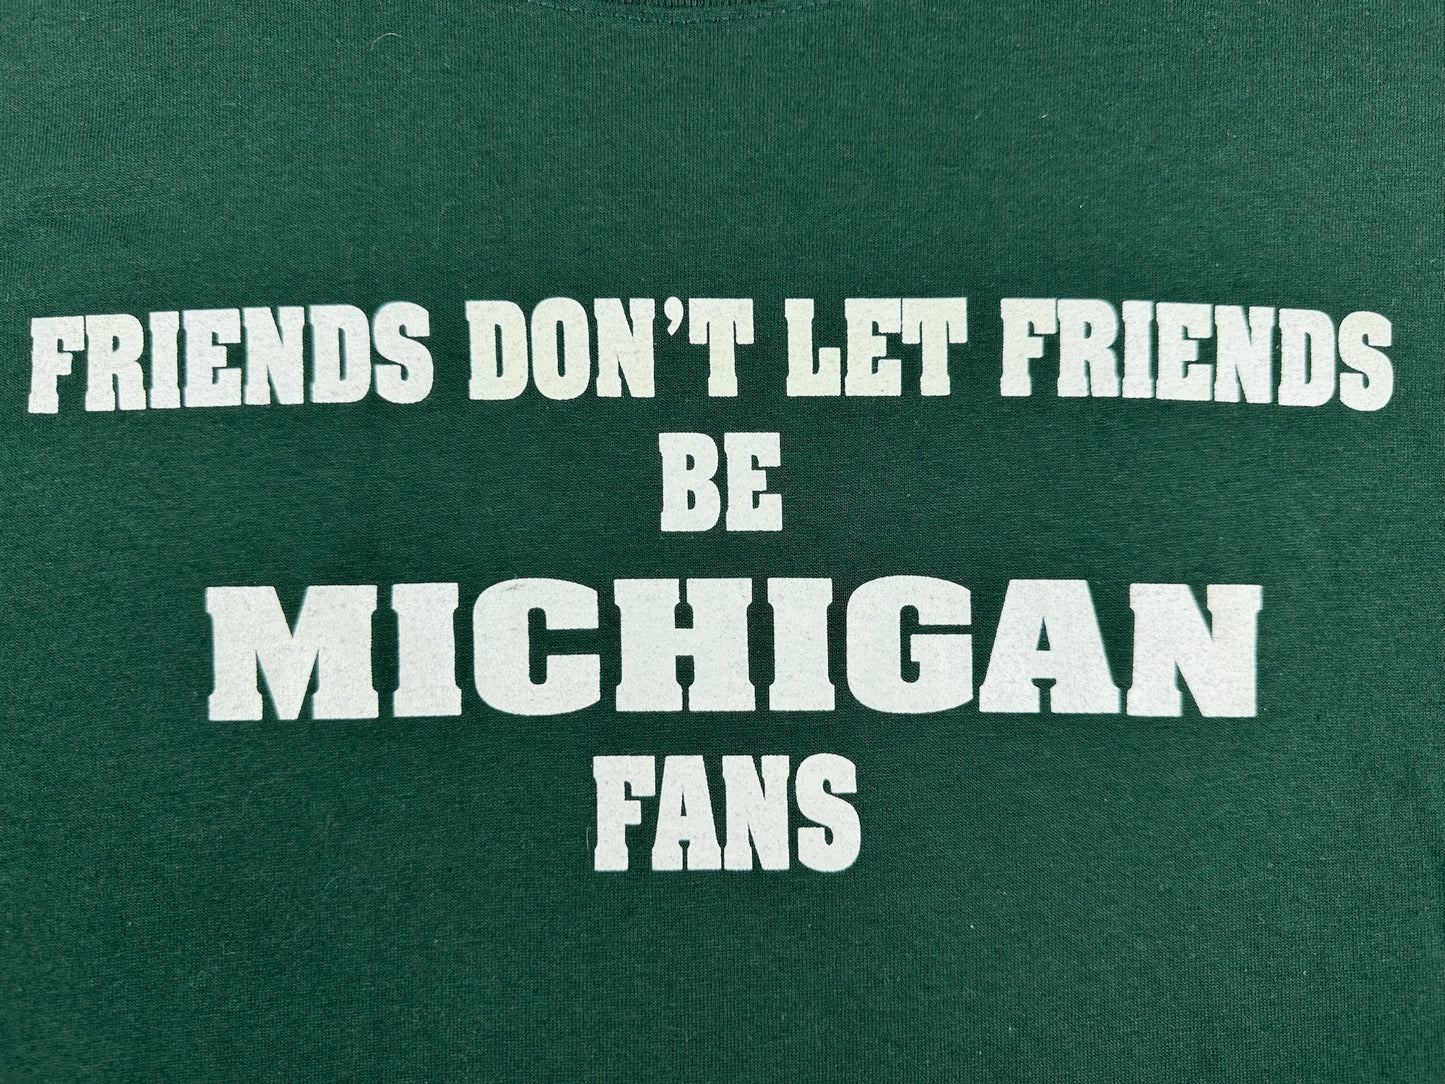 Michigan State Smack T-Shirt